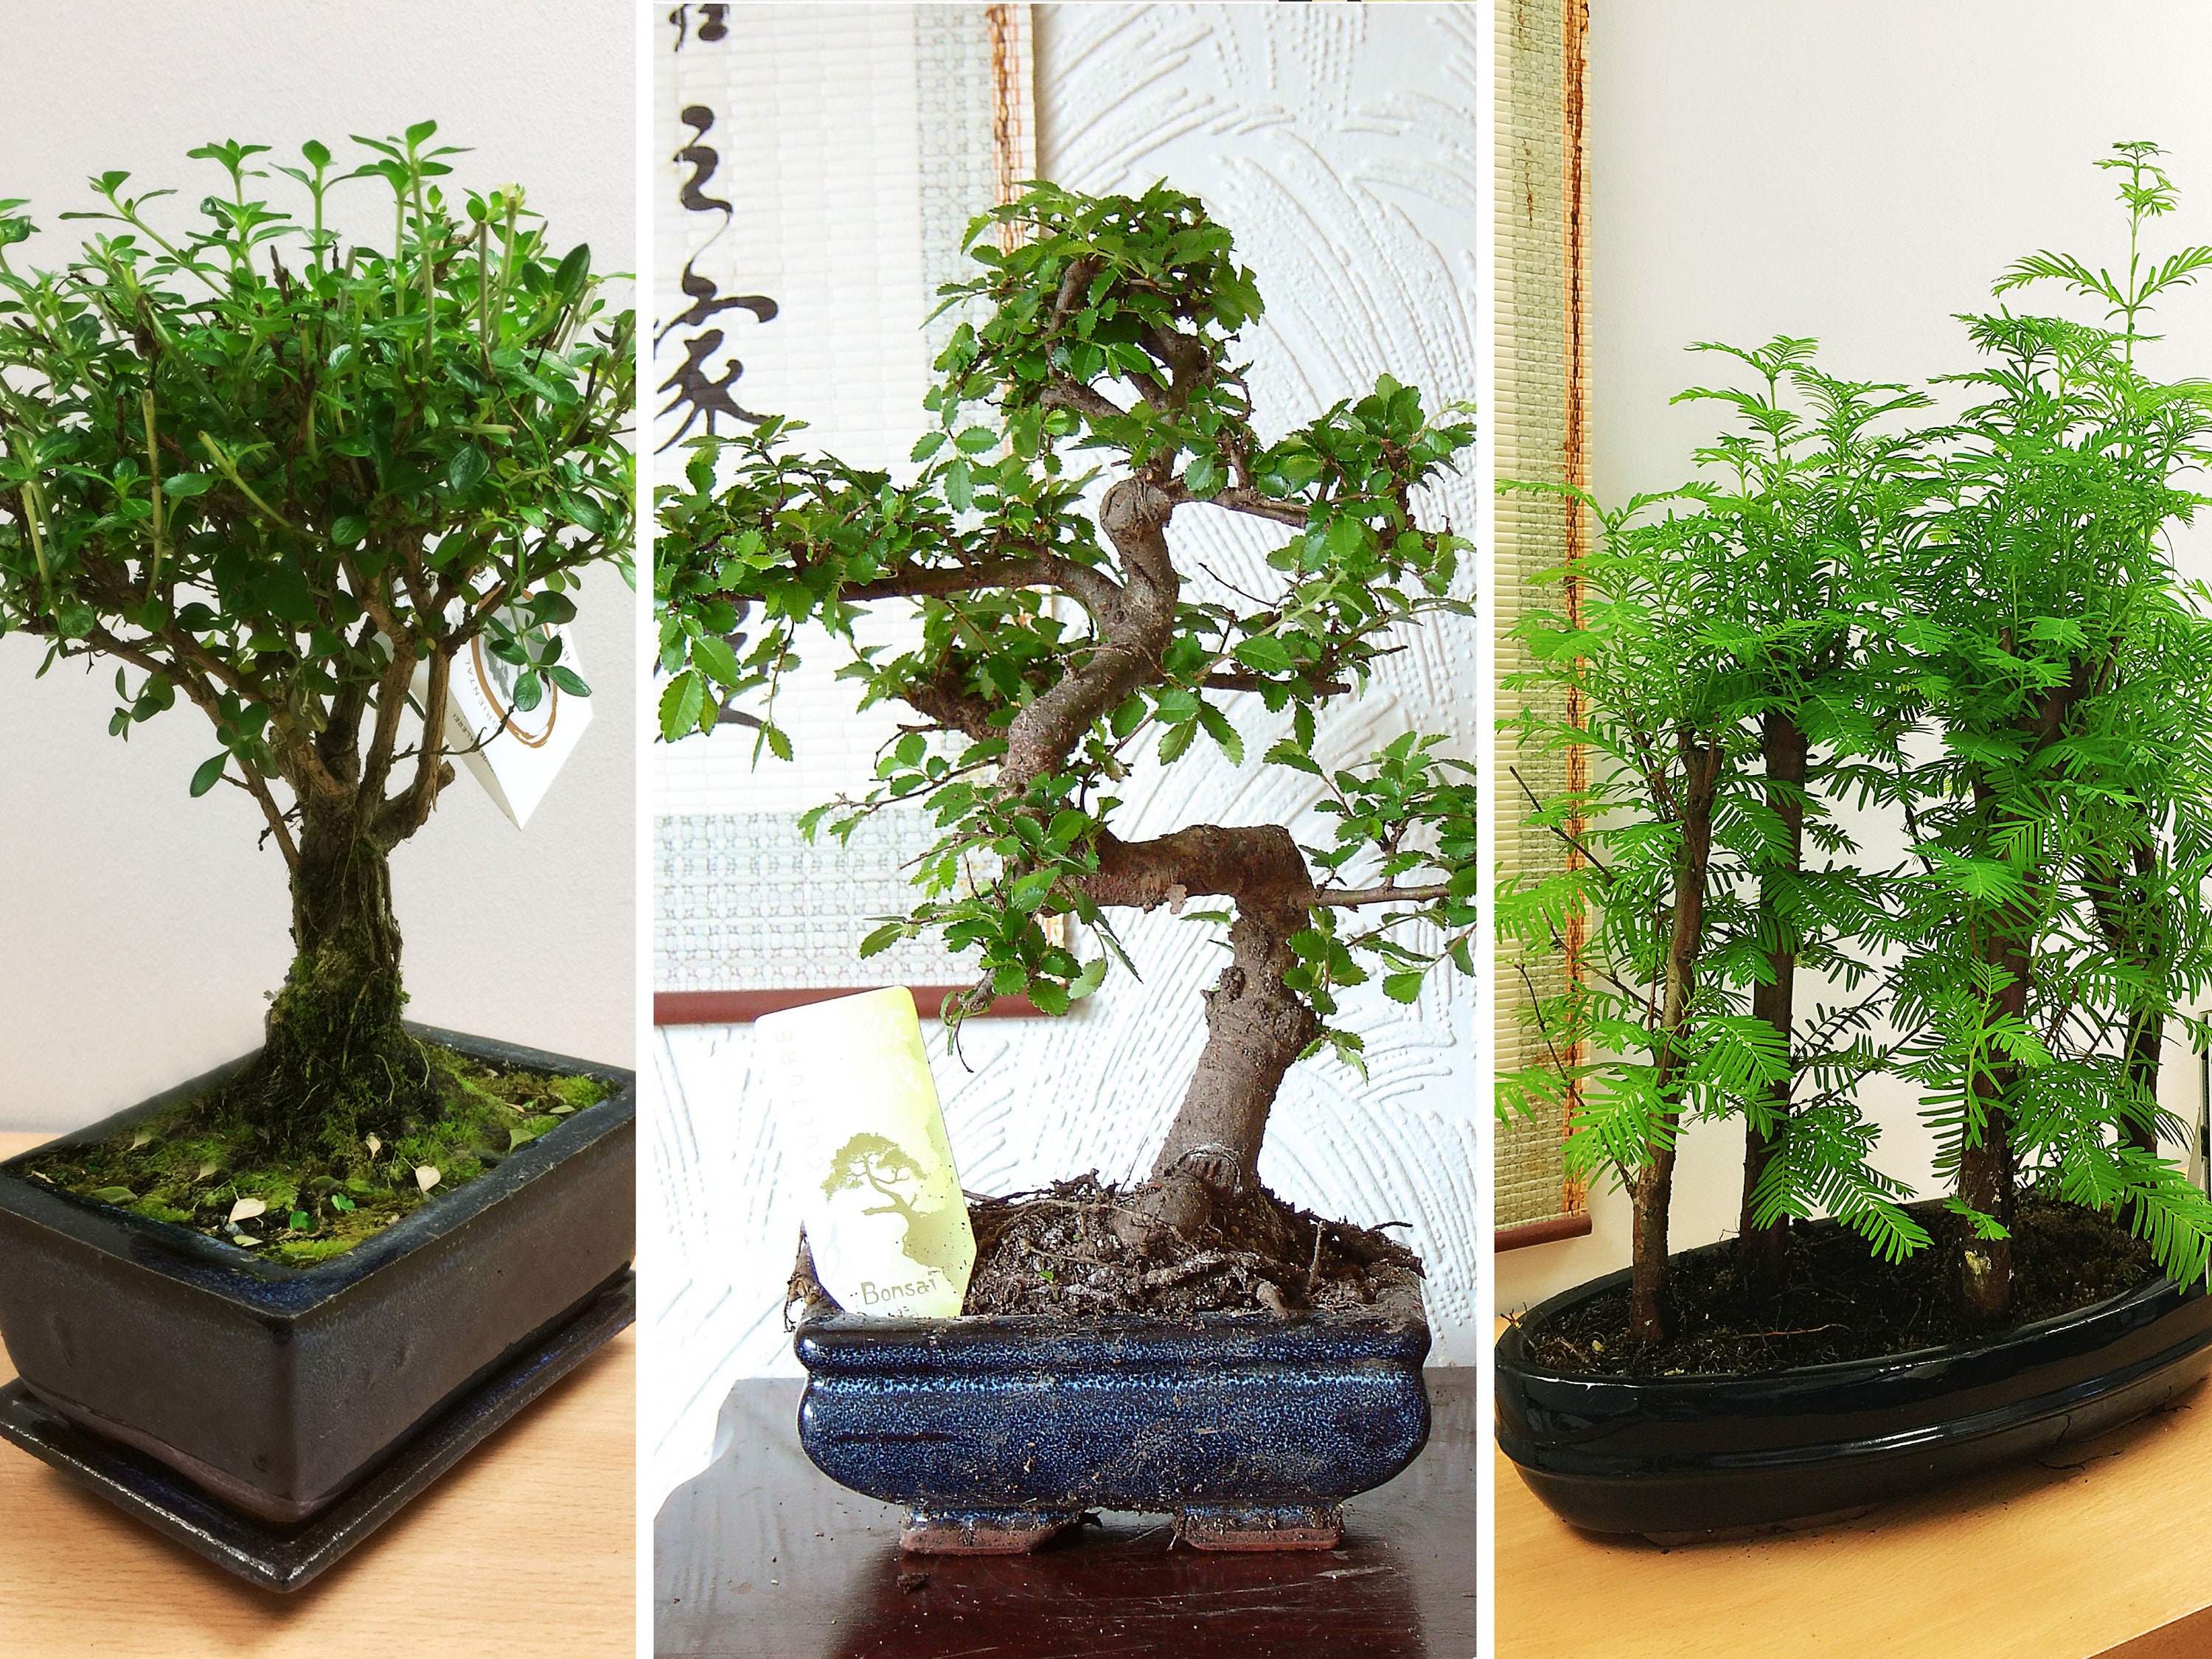 1 Bonsai Ceramic Pot House Plant Choose From Dawn Redwood, Chinese Pepper,  Fukien Tea, Japanese Holly, Money Tree, Chinese Elm -  UK